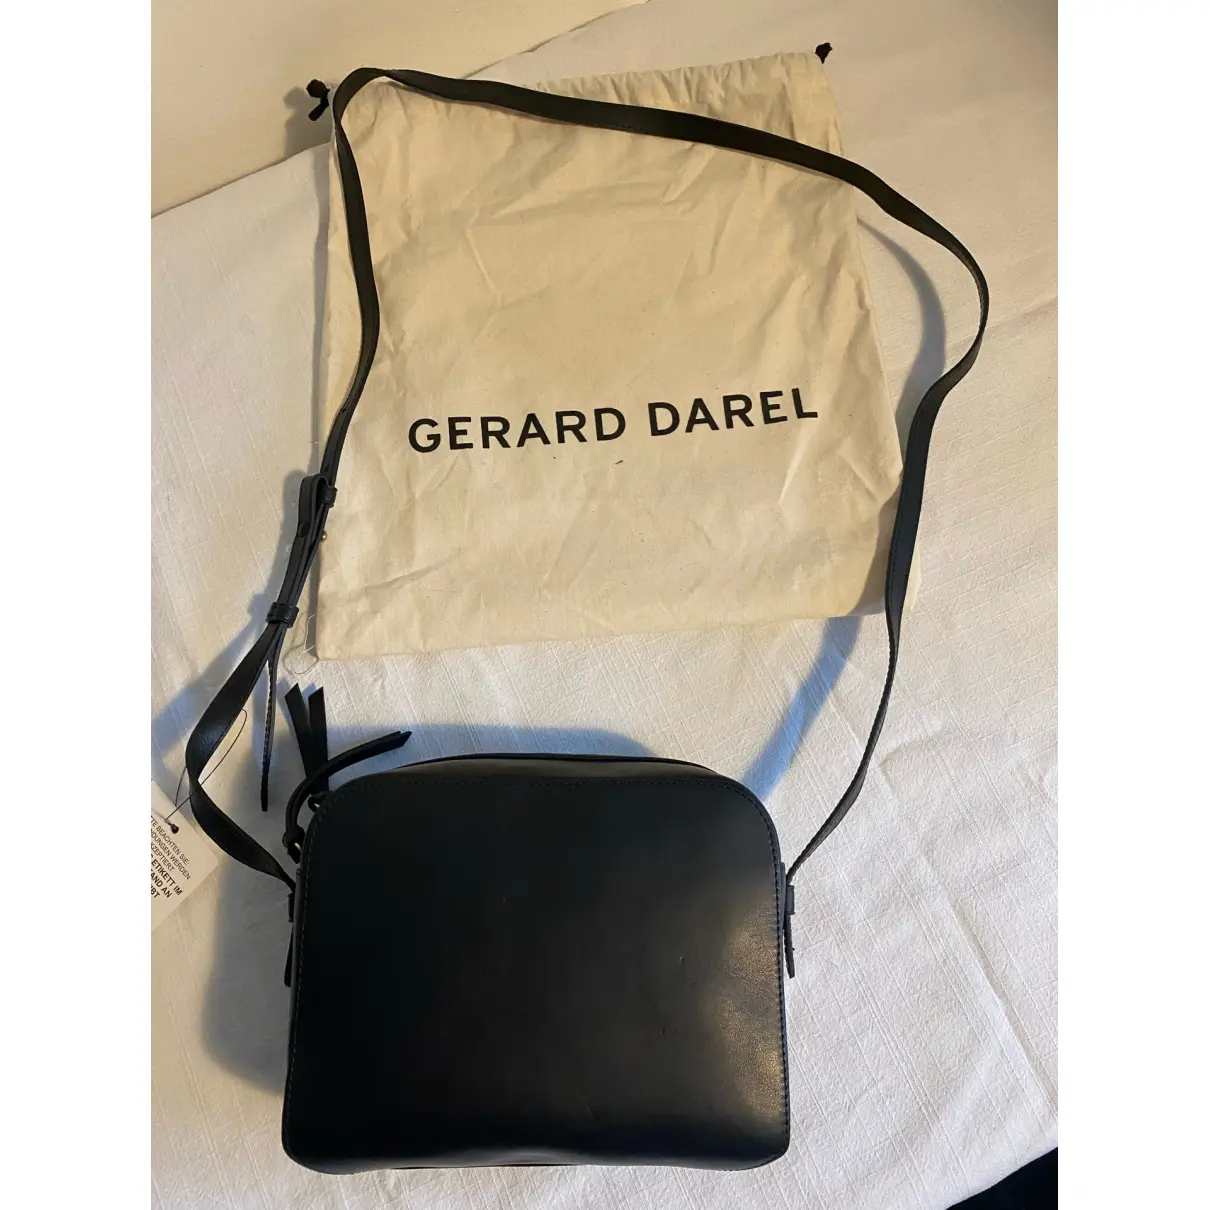 Buy Gerard Darel Leather bag online